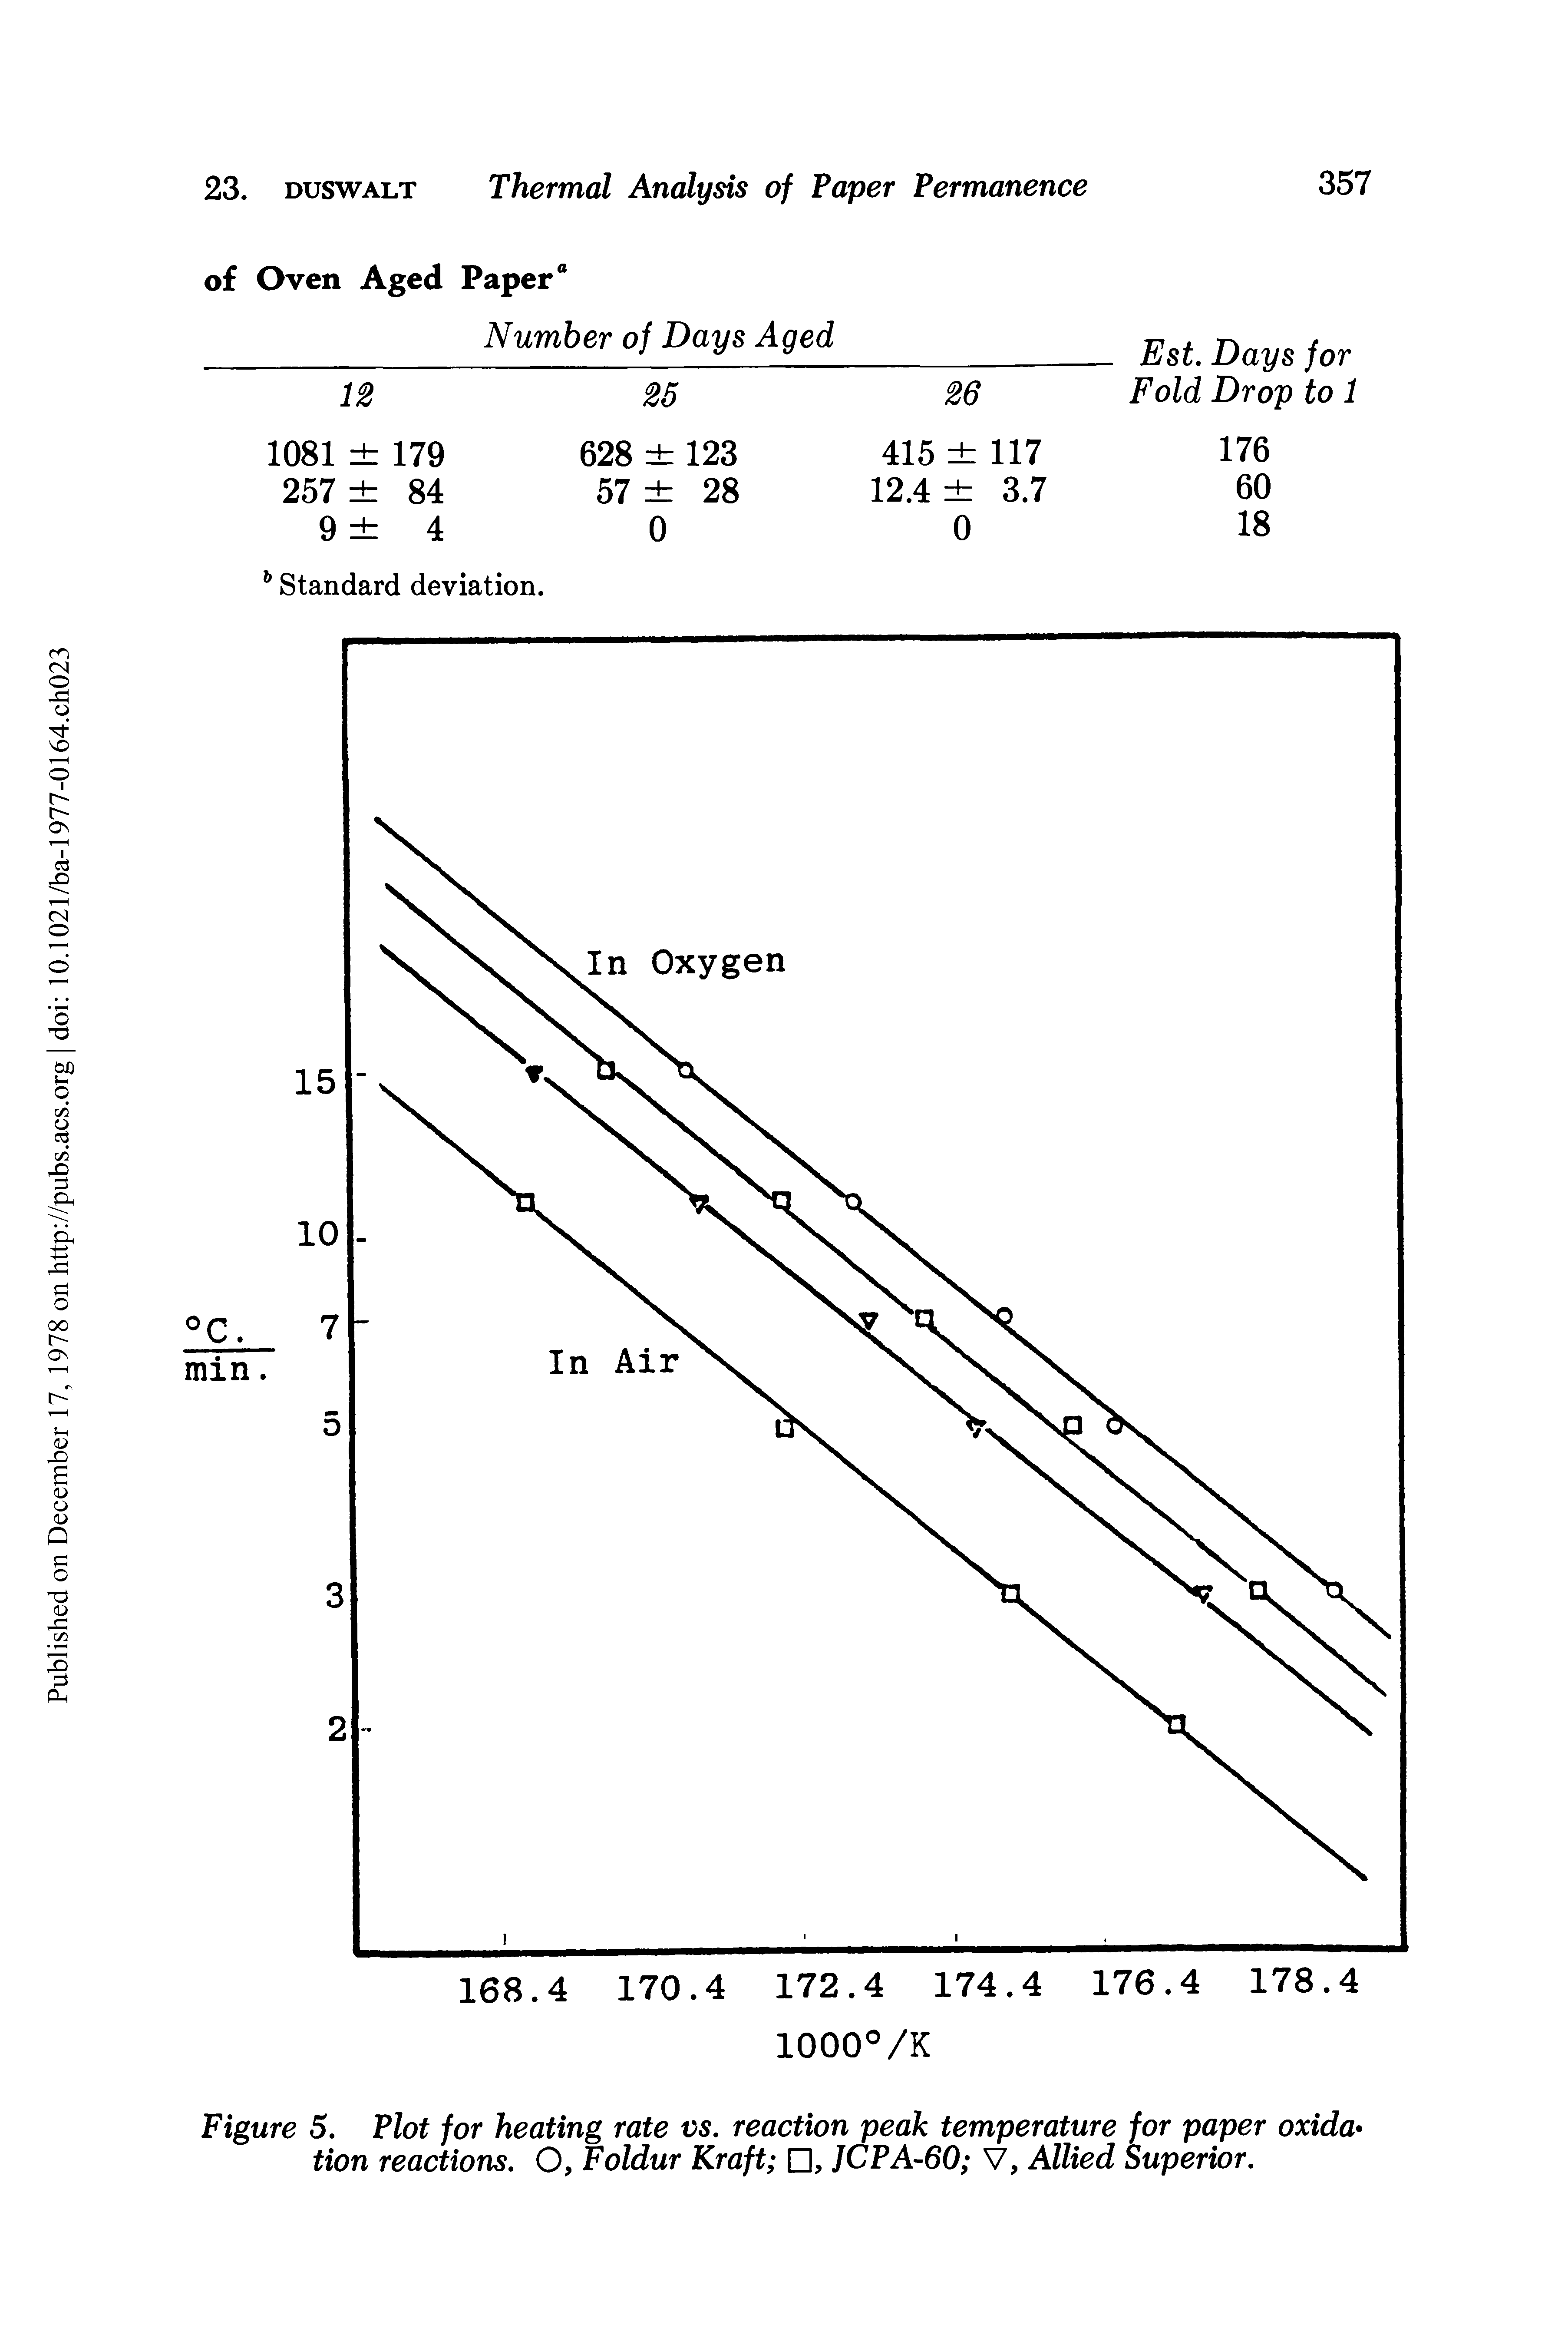 Figure 5. Plot for heating rate vs. reaction peak temperature for paper oxidation reactions. O, Foldur Kraft , JCPA-60 V, Allied Superior.